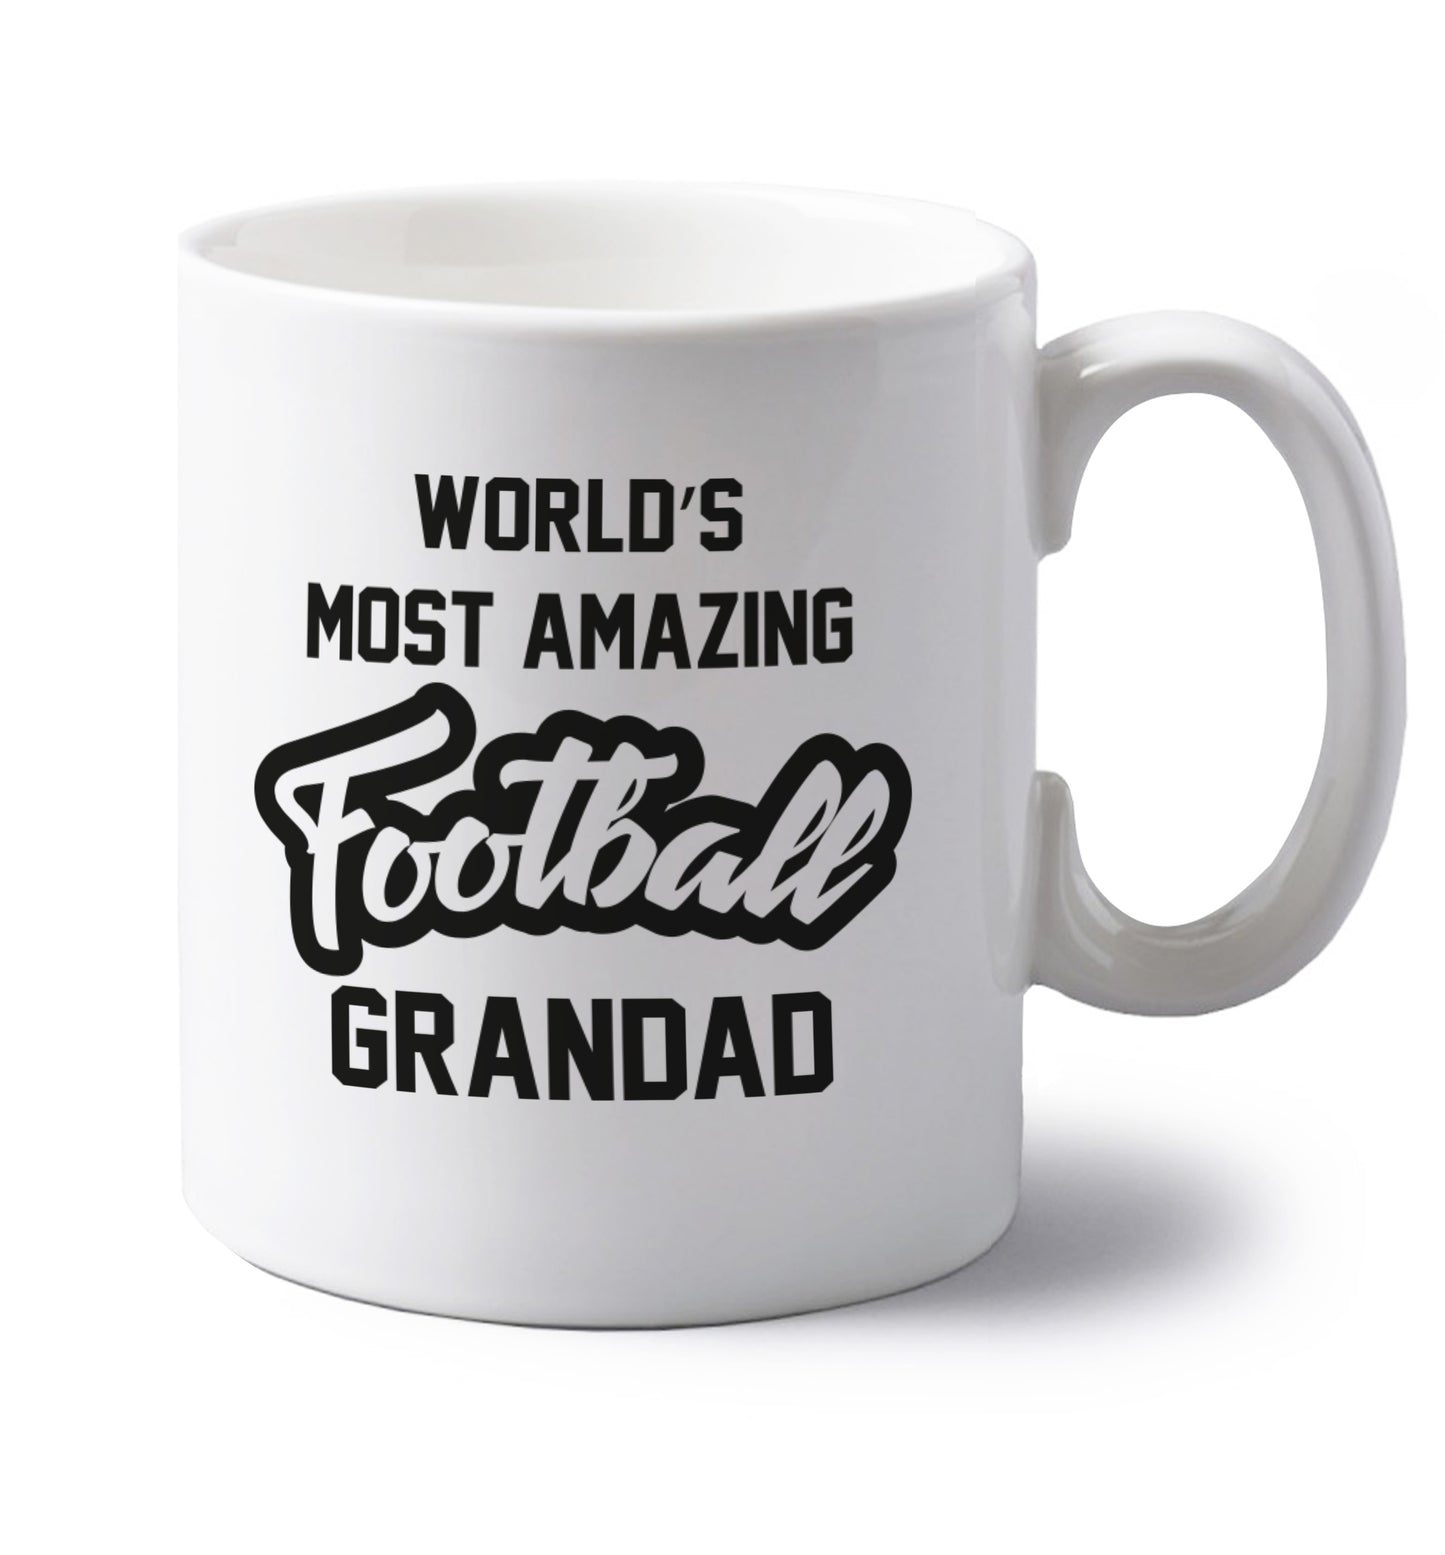 Worlds most amazing football grandad left handed white ceramic mug 